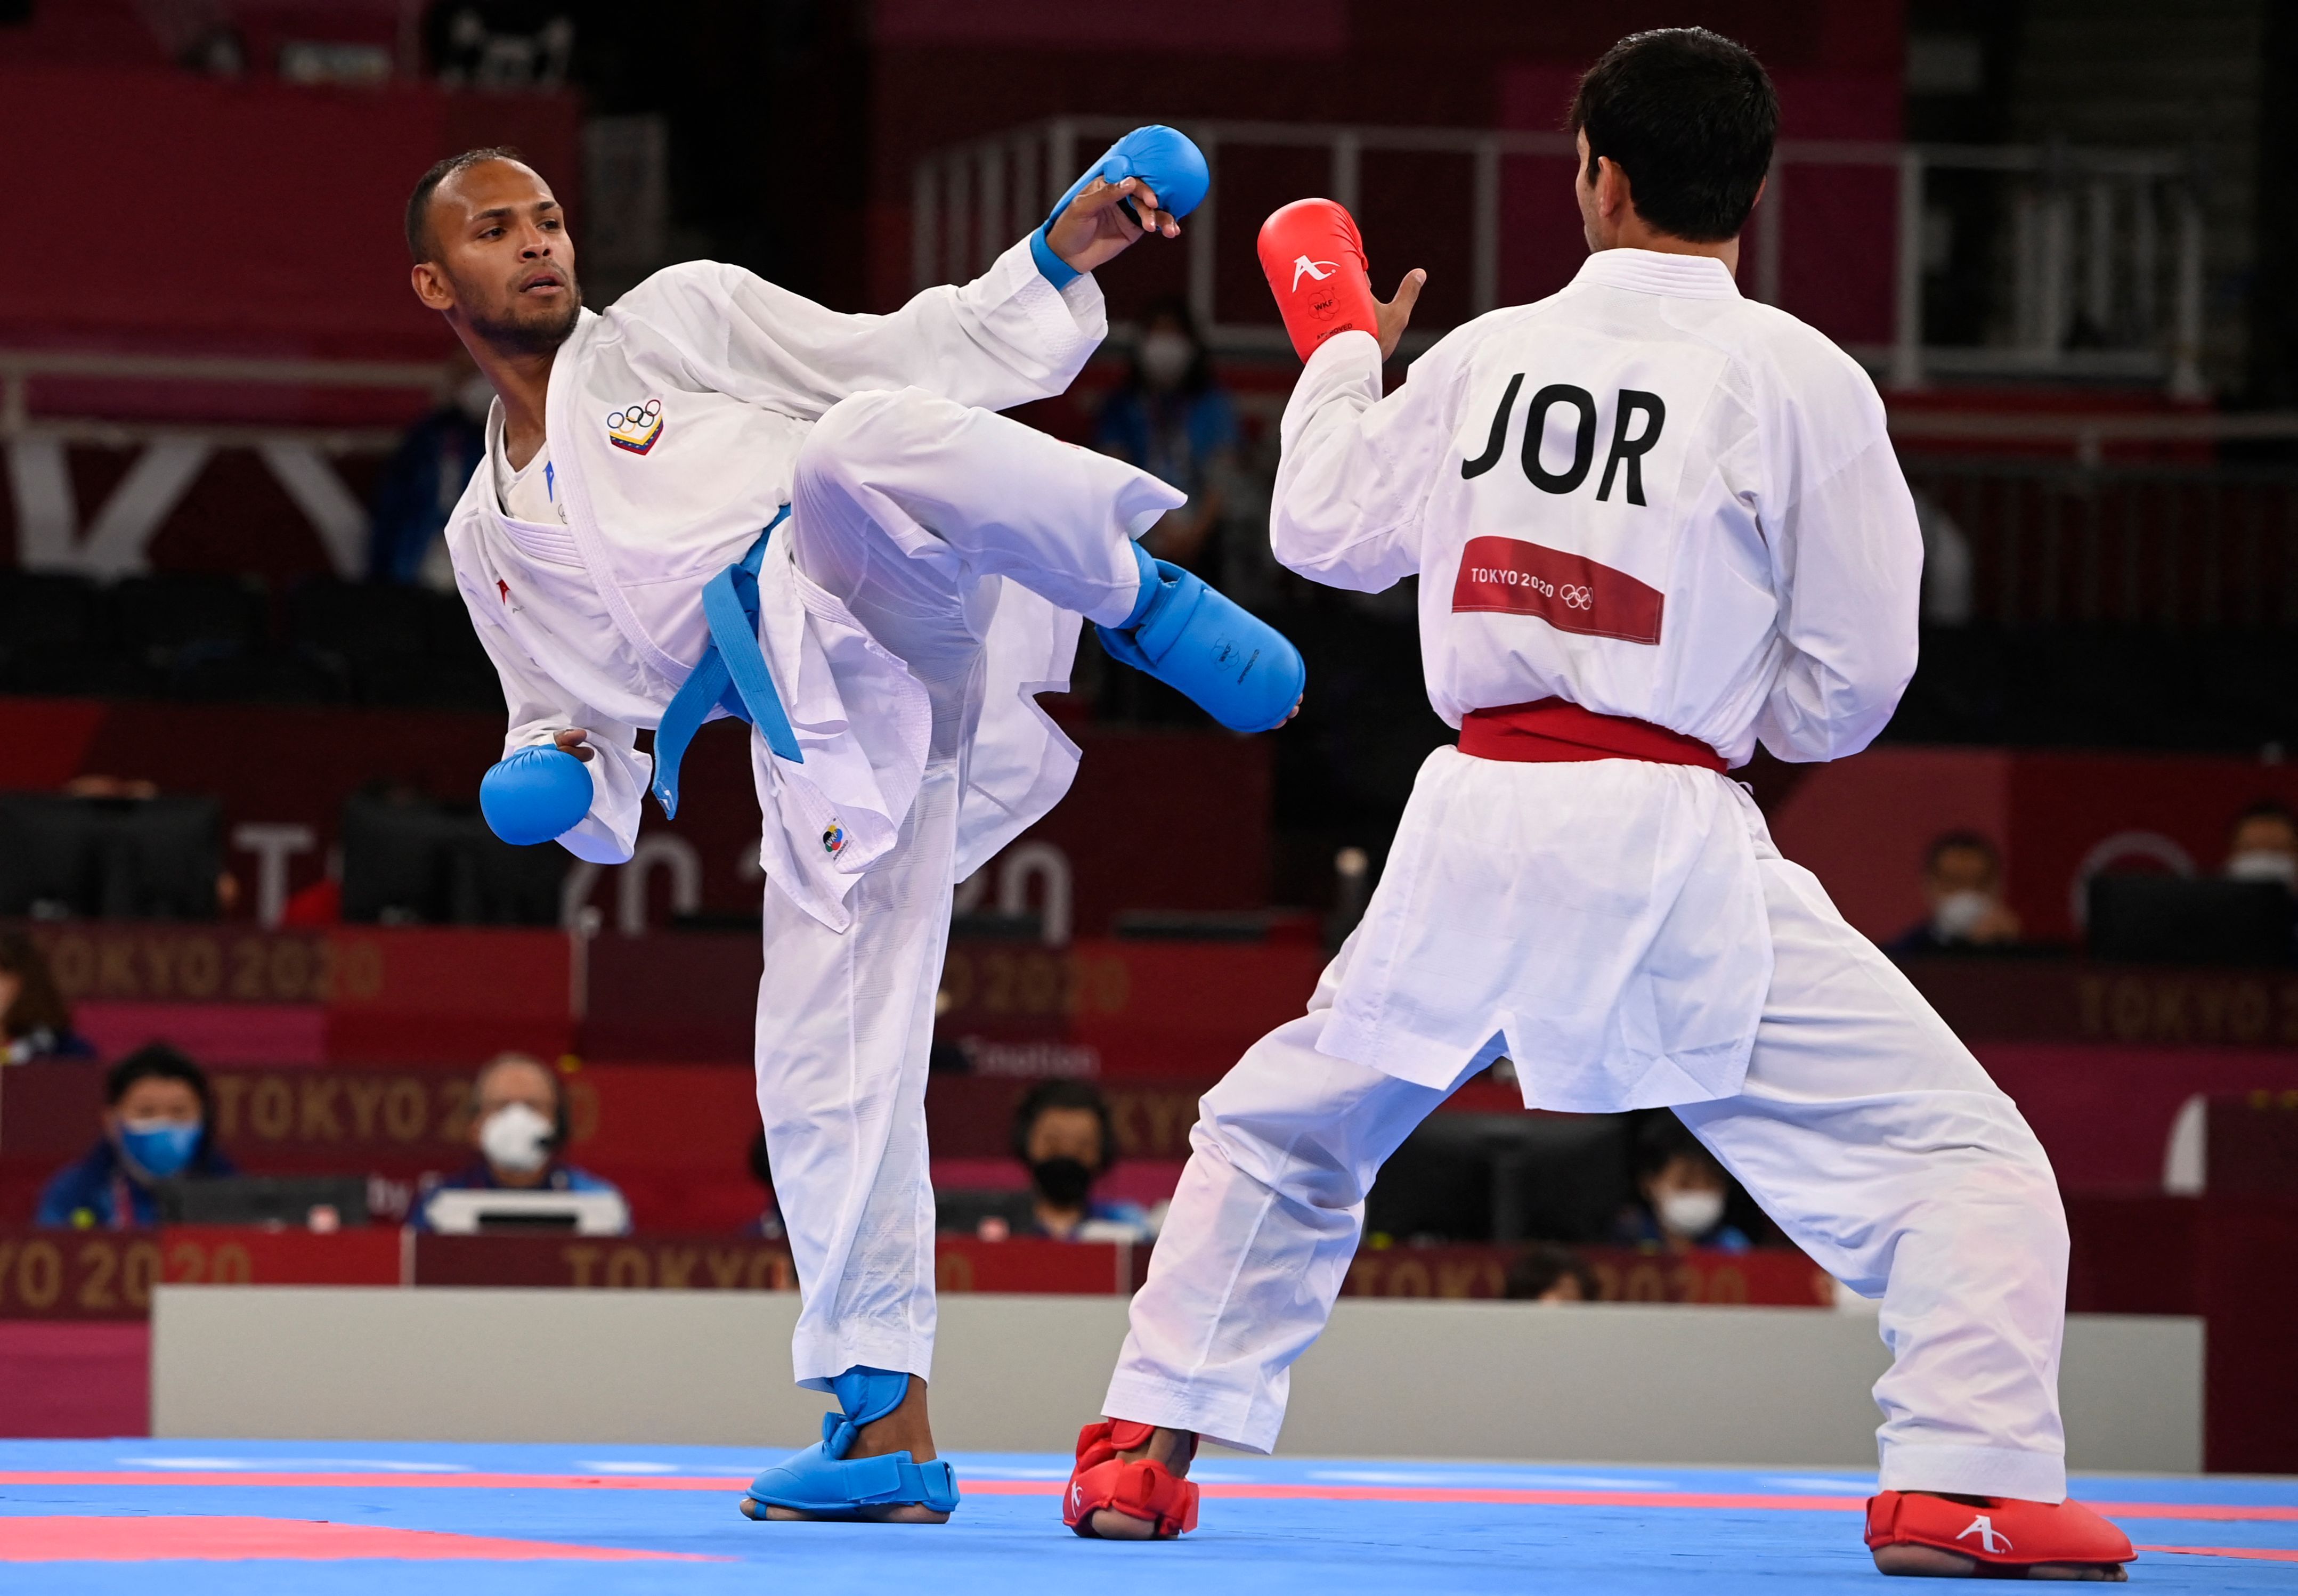 Jordan's Abdel Rahman Almasatfa (R) competes against Venezuela's Andres Eduardo Madera Delgado in the men's kumite -67kg elimination round of the karate competition